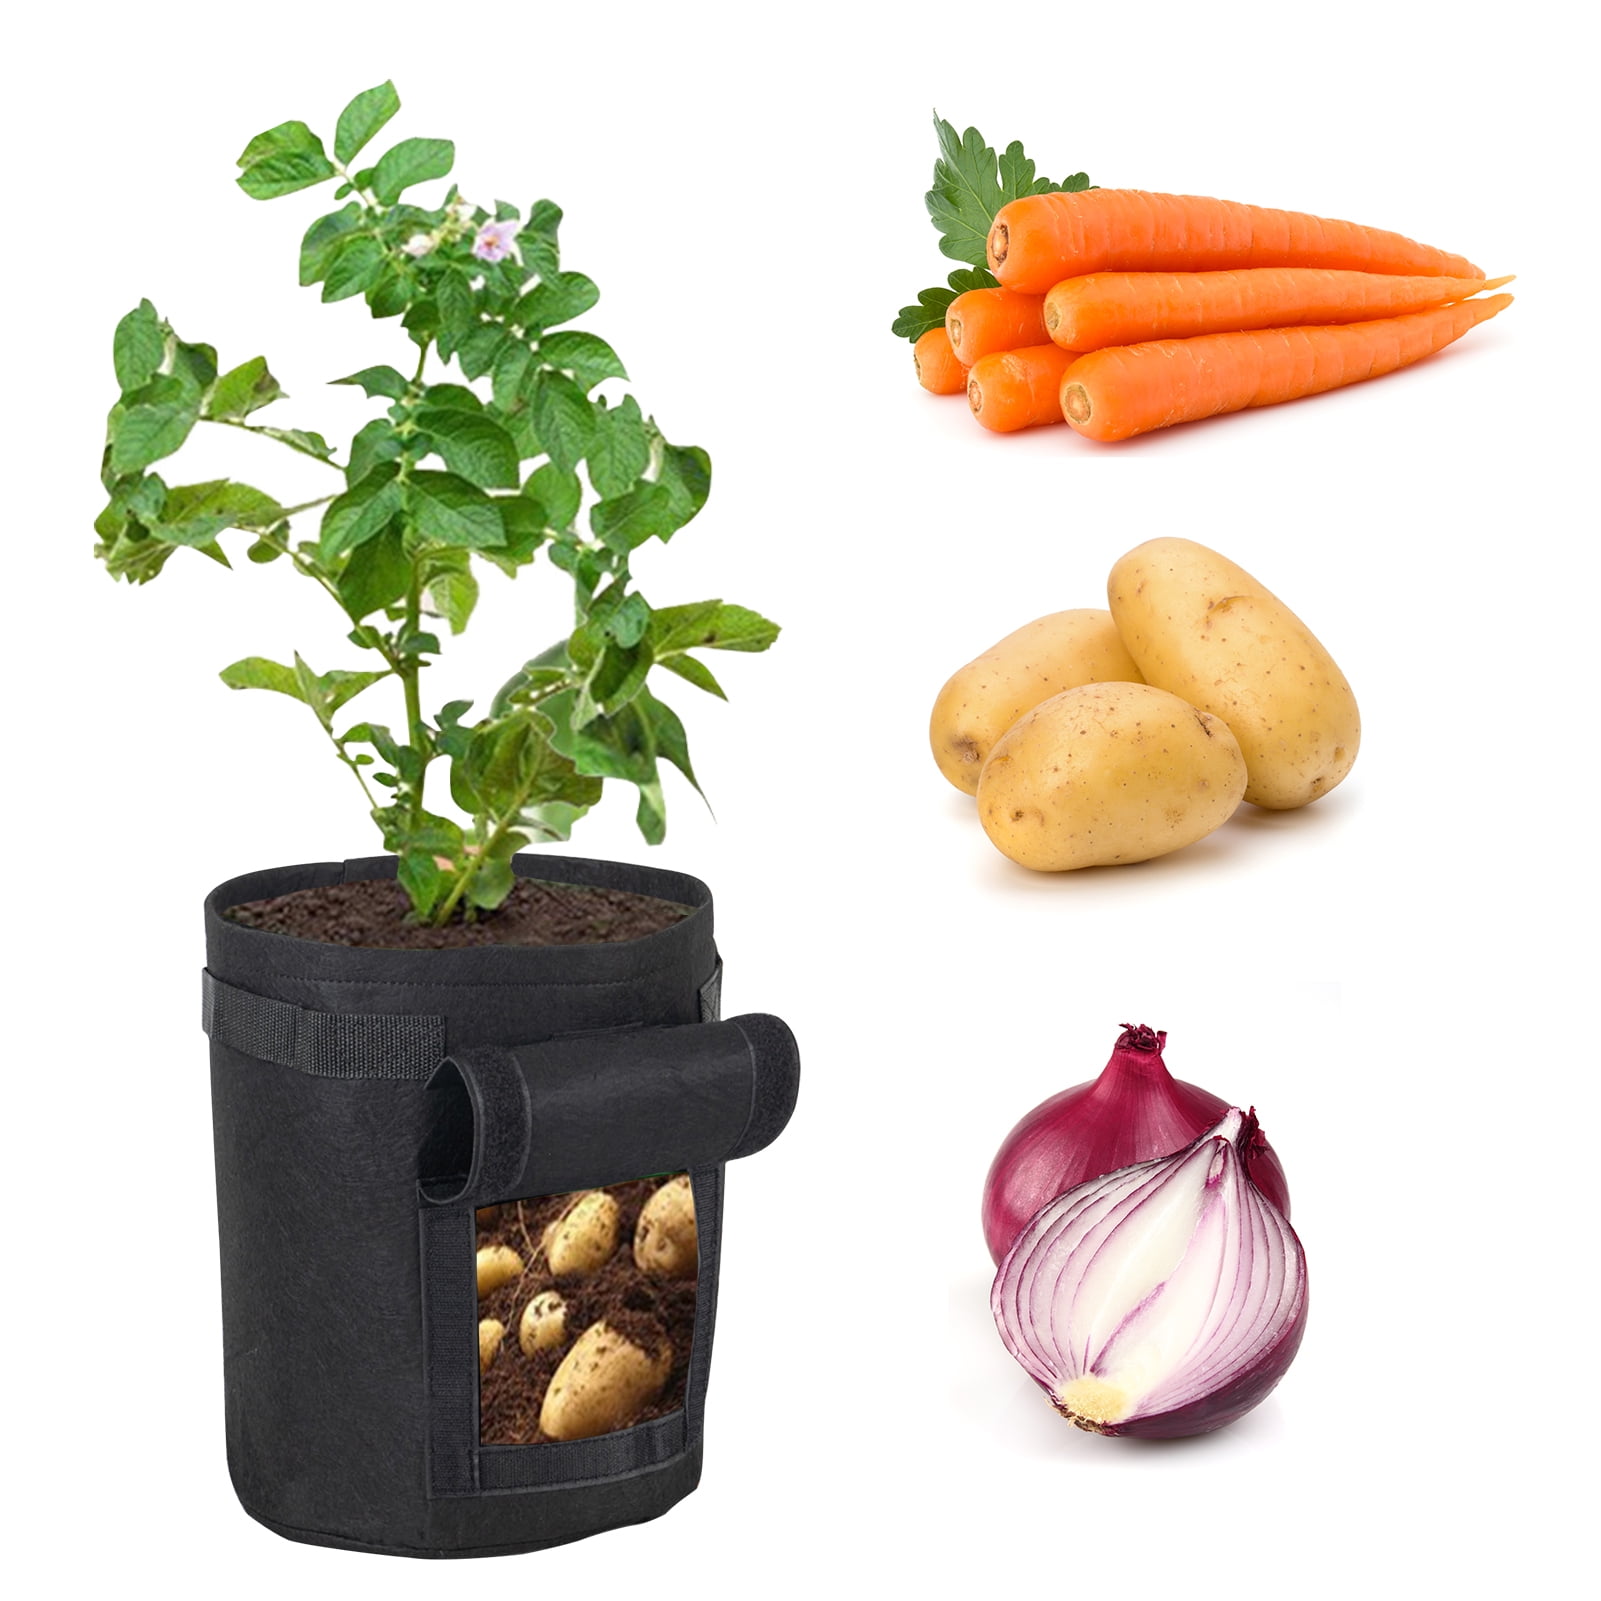 Details about   Potato Grow Bags Tomato Plant Bag Home Garden Vegetables Planter Containers Pot' 